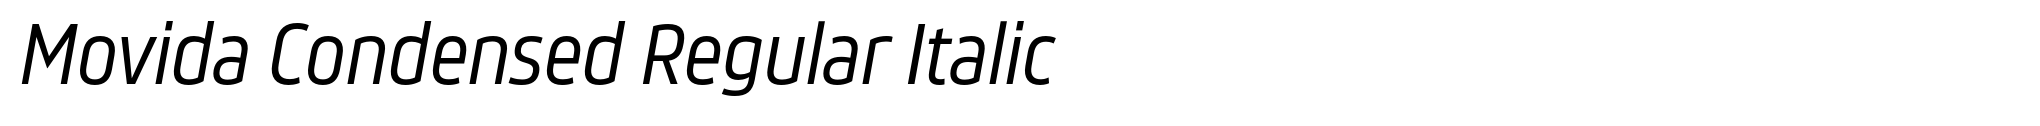 Movida Condensed Regular Italic image